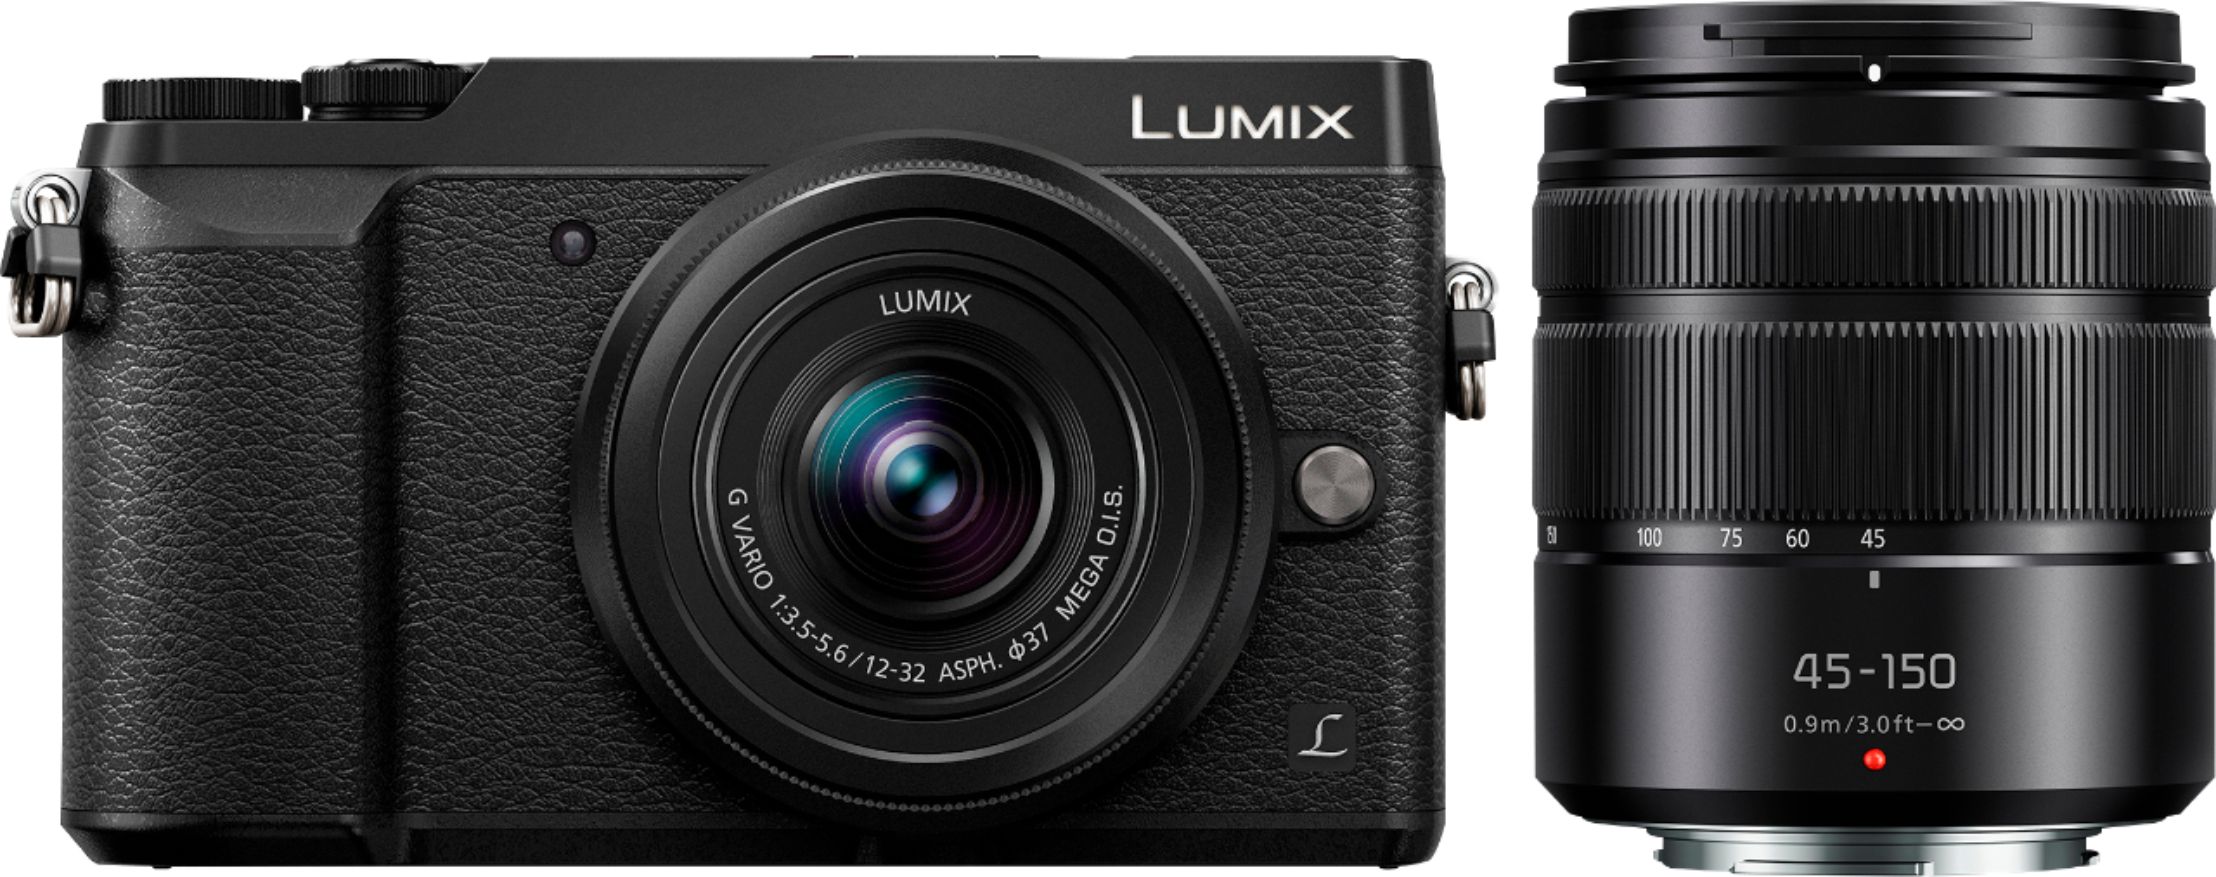 Panasonic - Lumix G DMC-GX85W Mirrorless Camera with 12-32mm and 45-150mm Lenses - Black